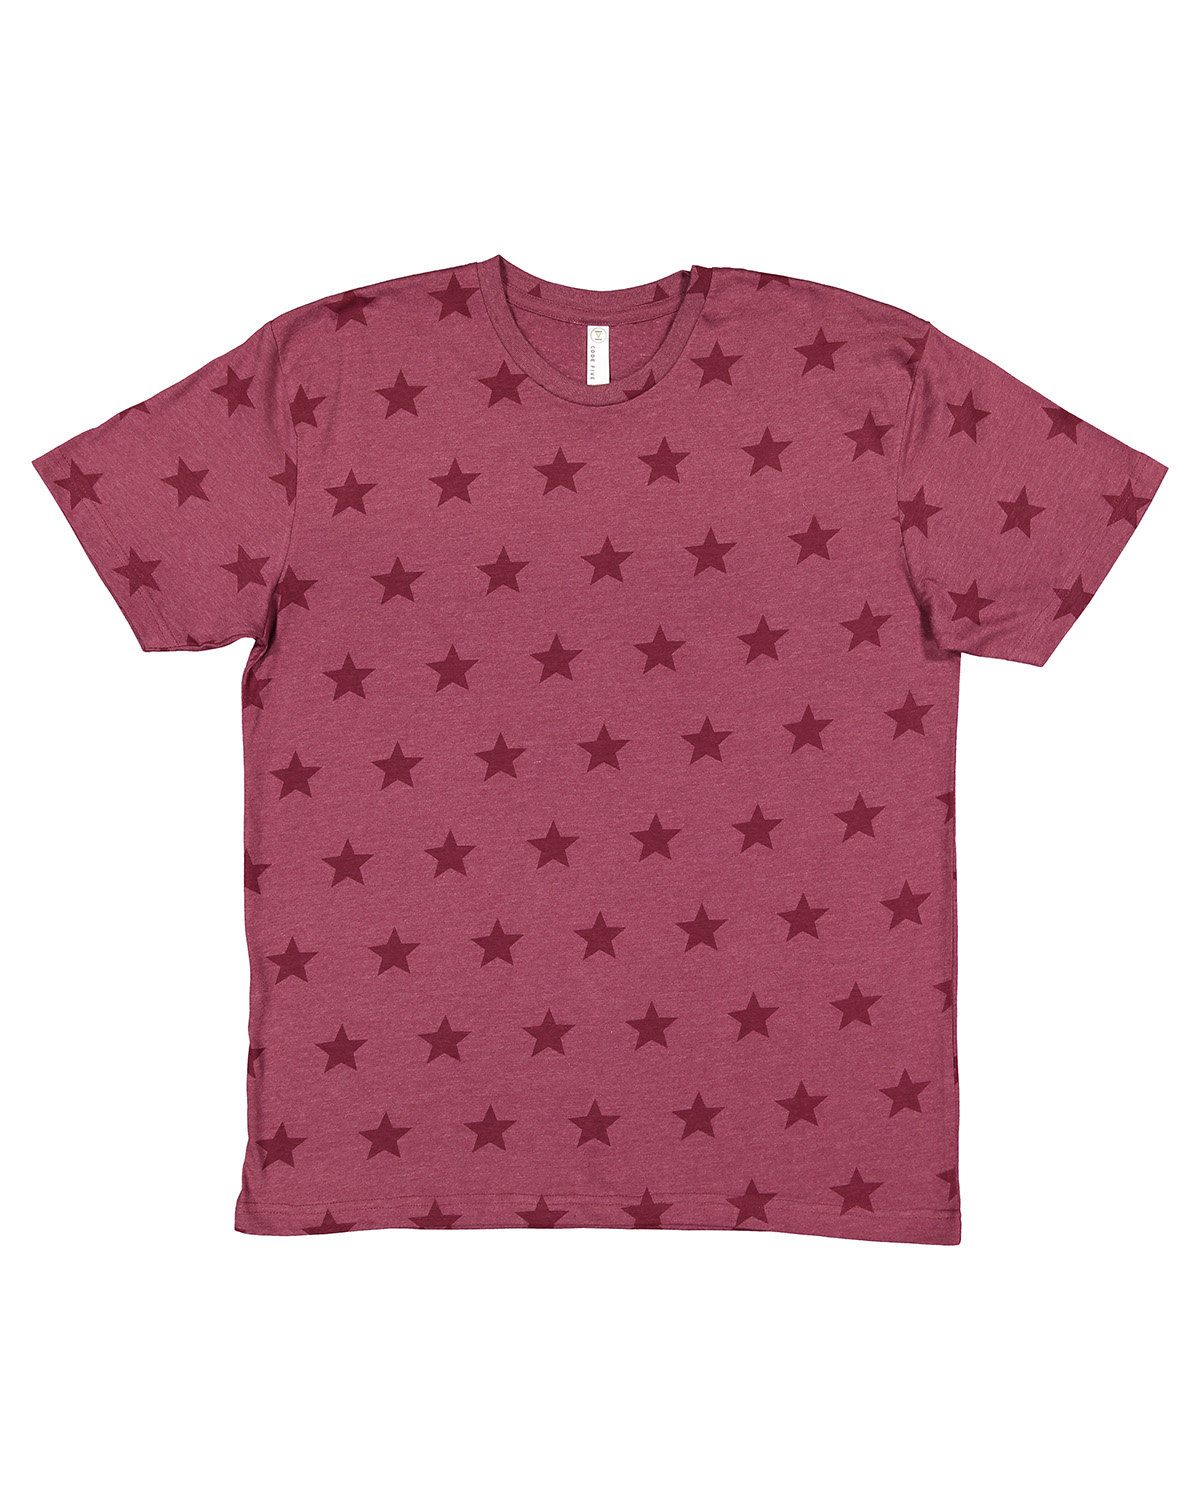 Code Five Mens' Five Star T-Shirt BURGUNDY STAR 